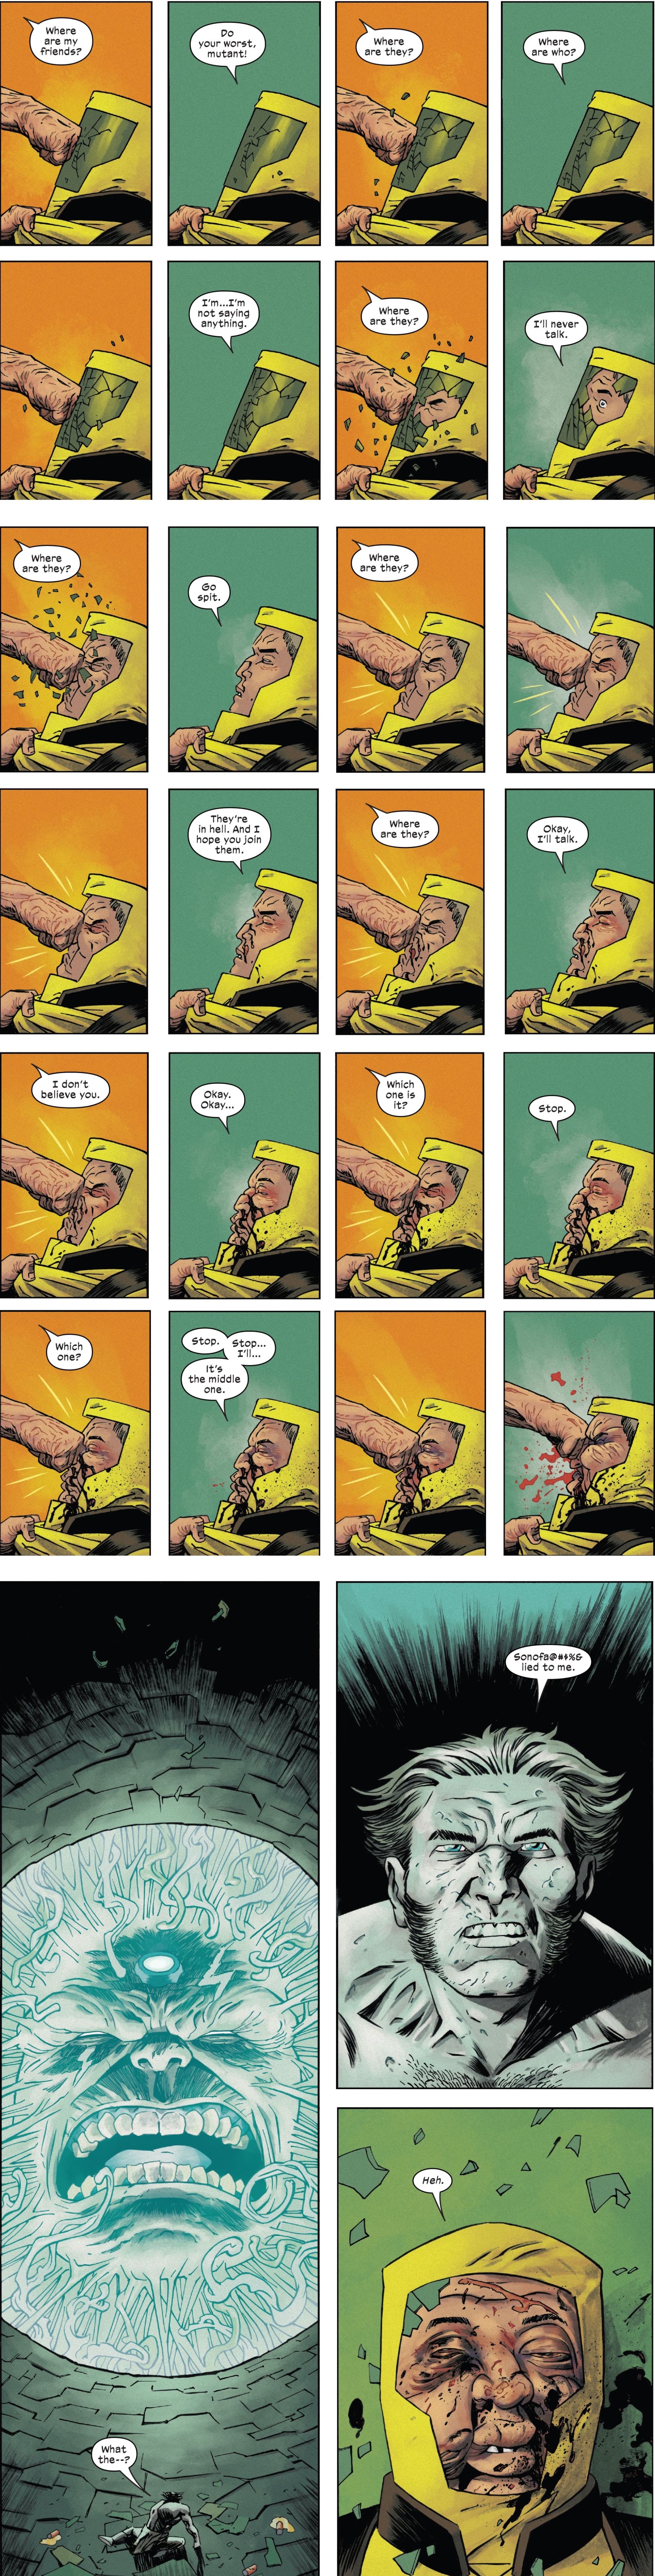 Wolverine Fails At Interrogation in X Men Unlimited